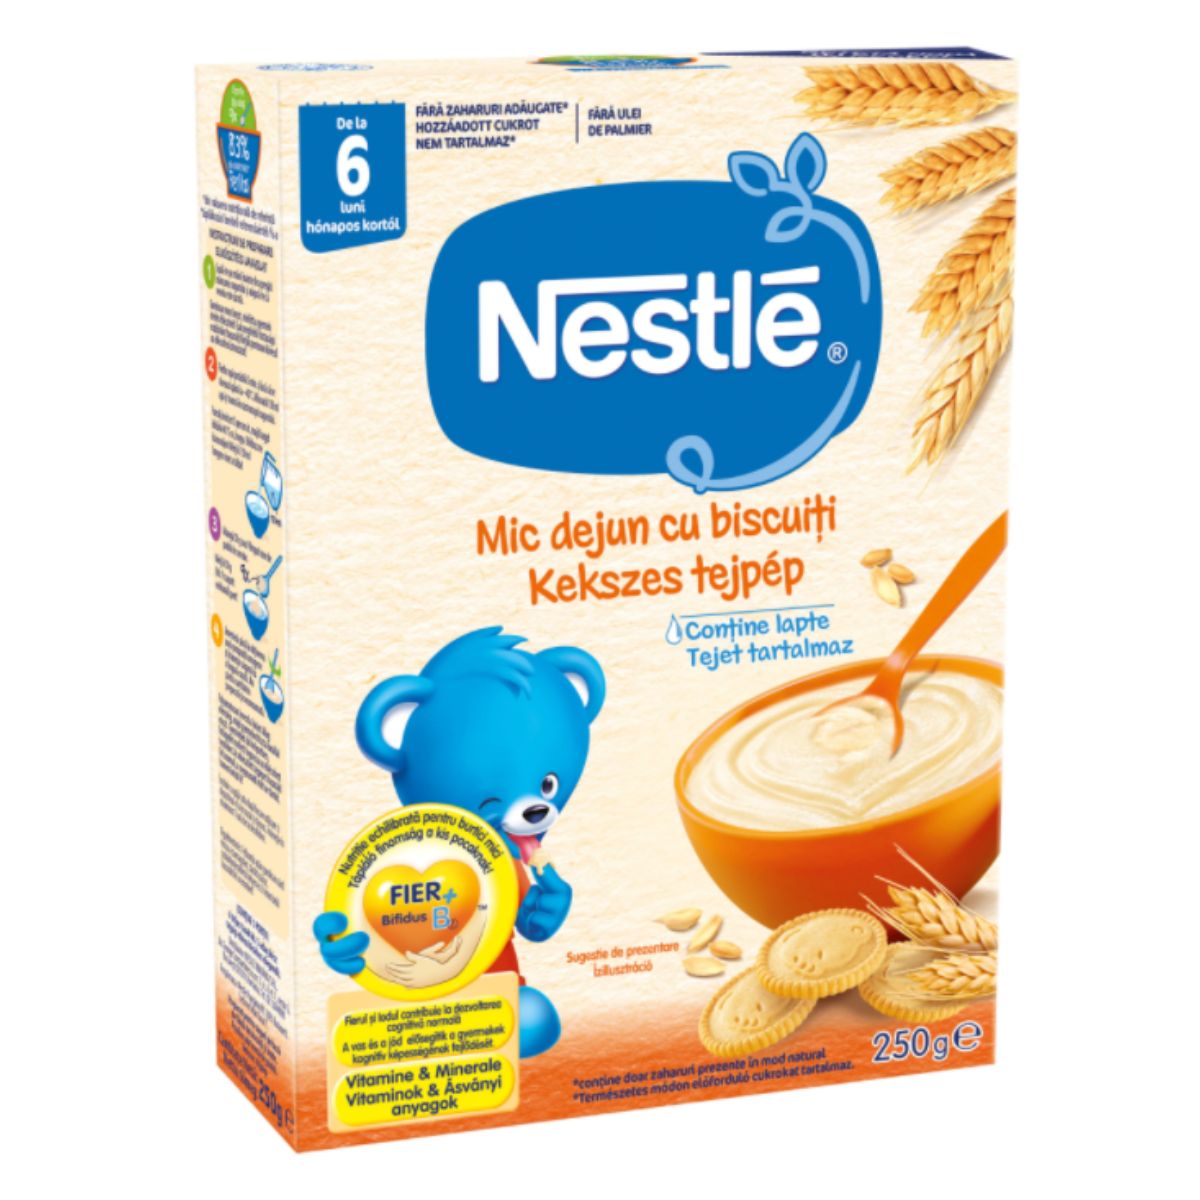 Cereale Nestle, Mic dejun cu biscuiti, 250 g 250